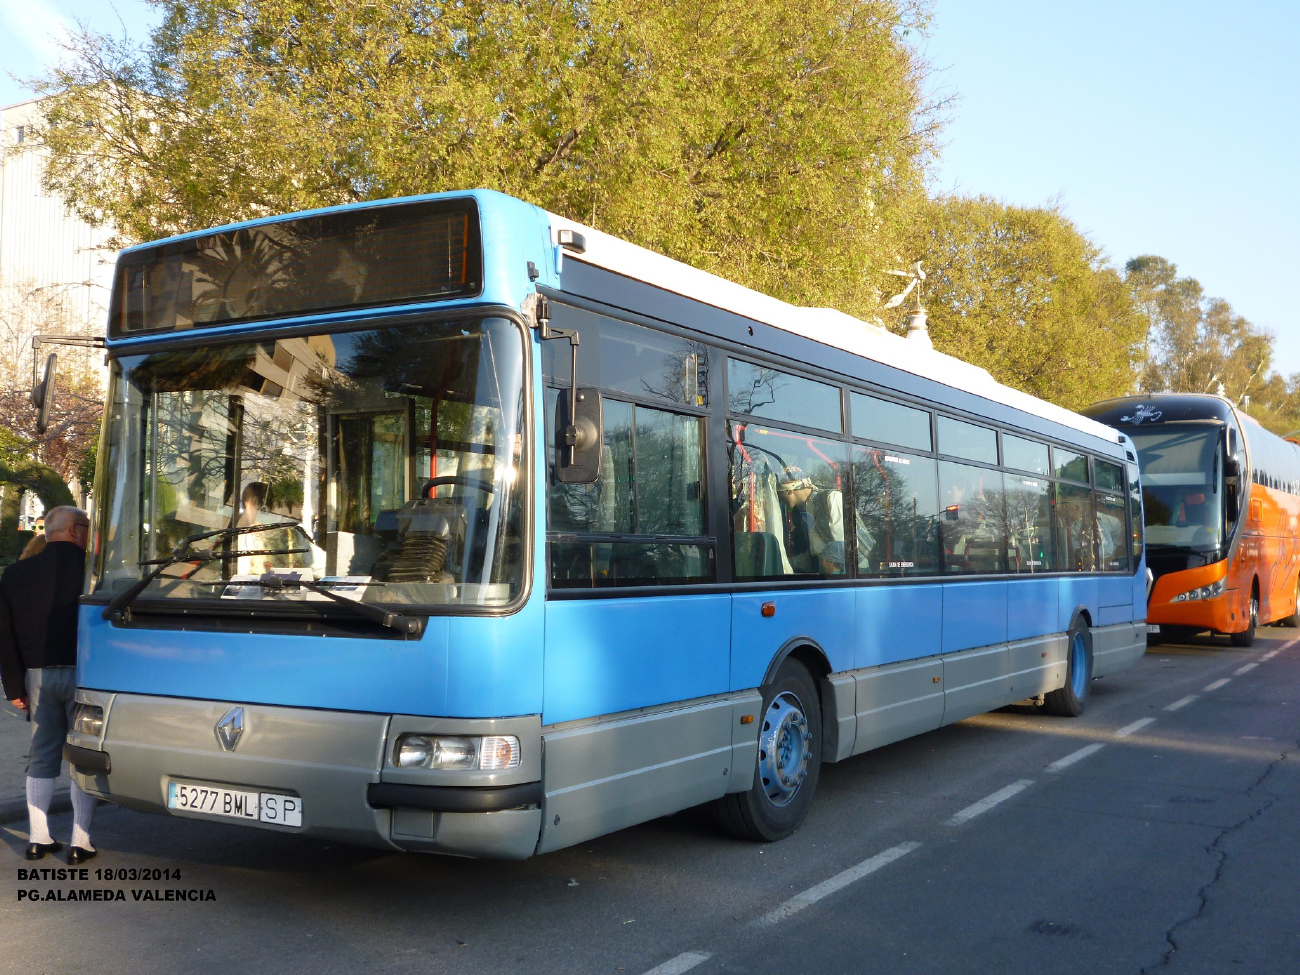 Валенсия, Hispano CityLine (Irisbus Agora Line) № 5277 BML